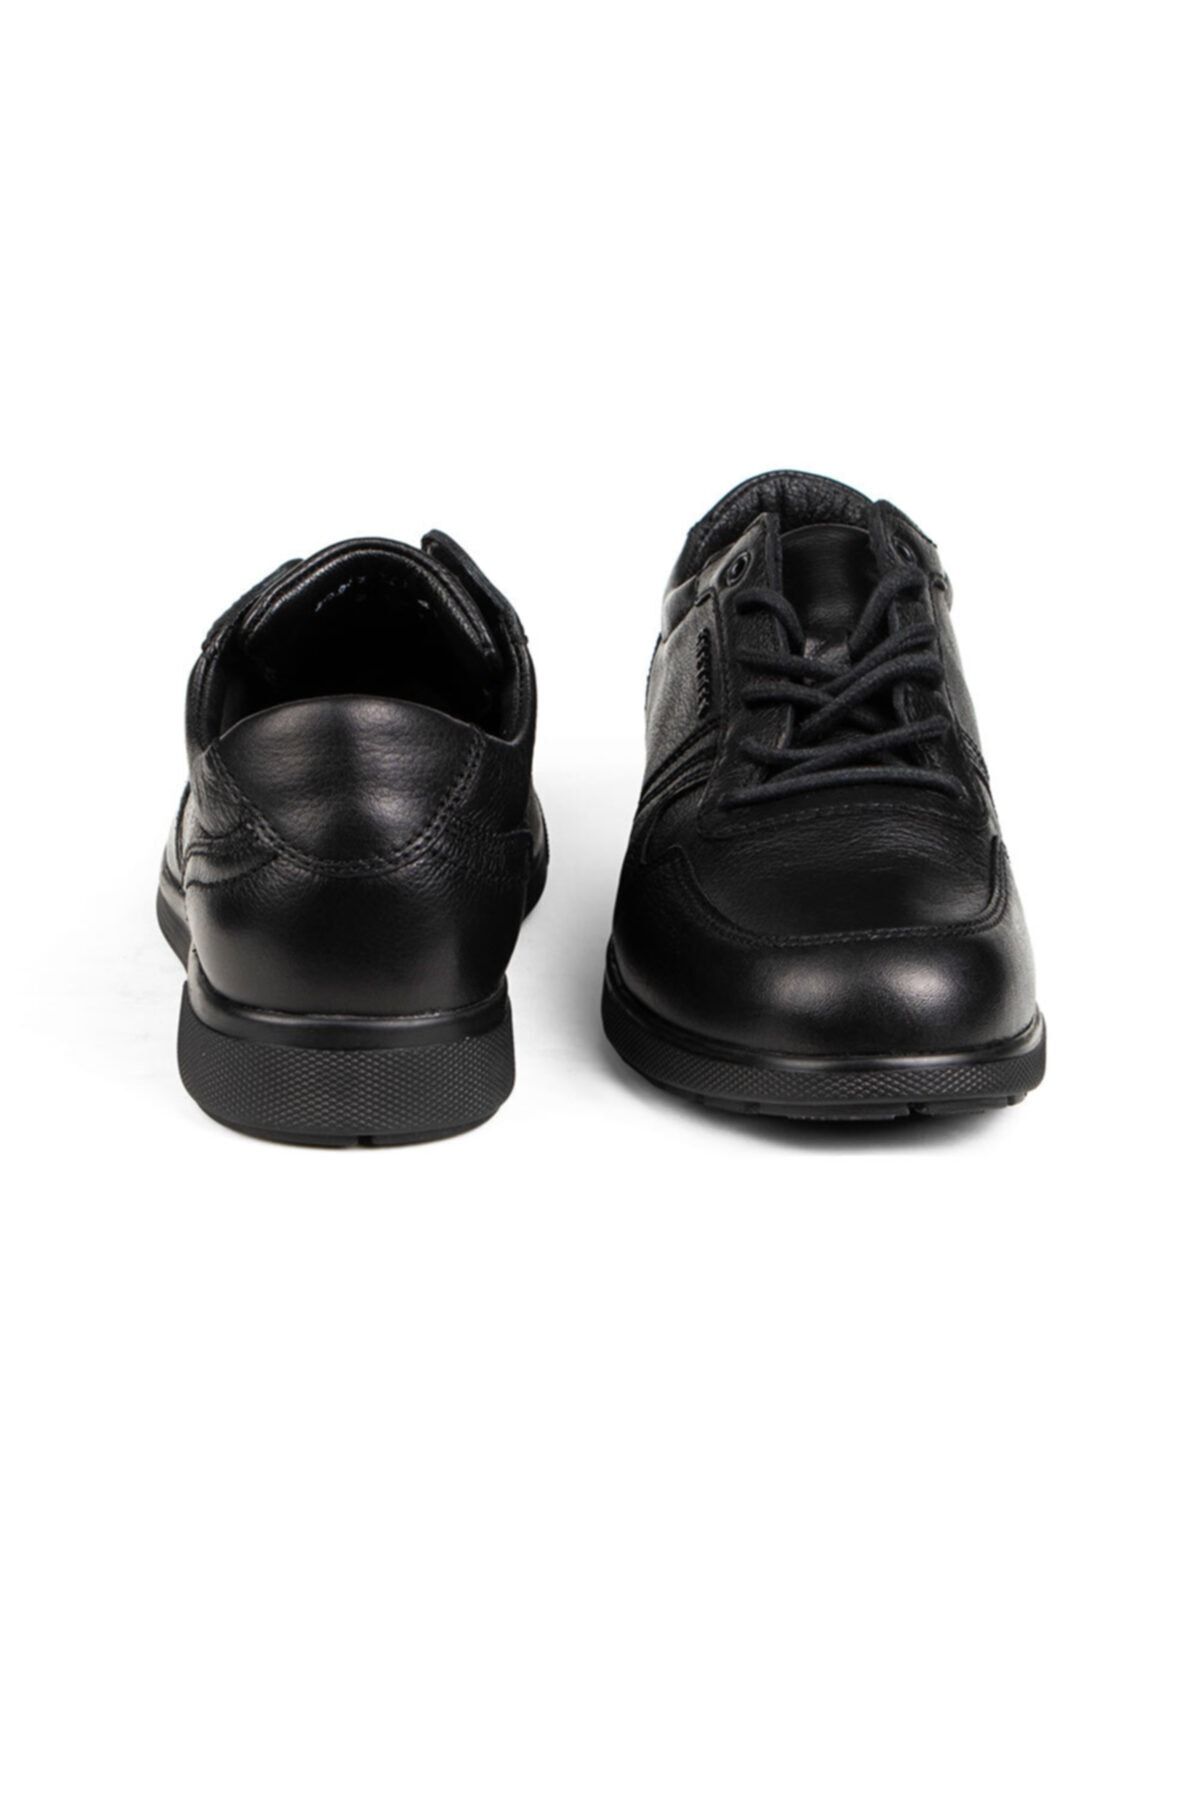 Greyder 10201 Mr Erkek Comfort Ayakkabı Siyah